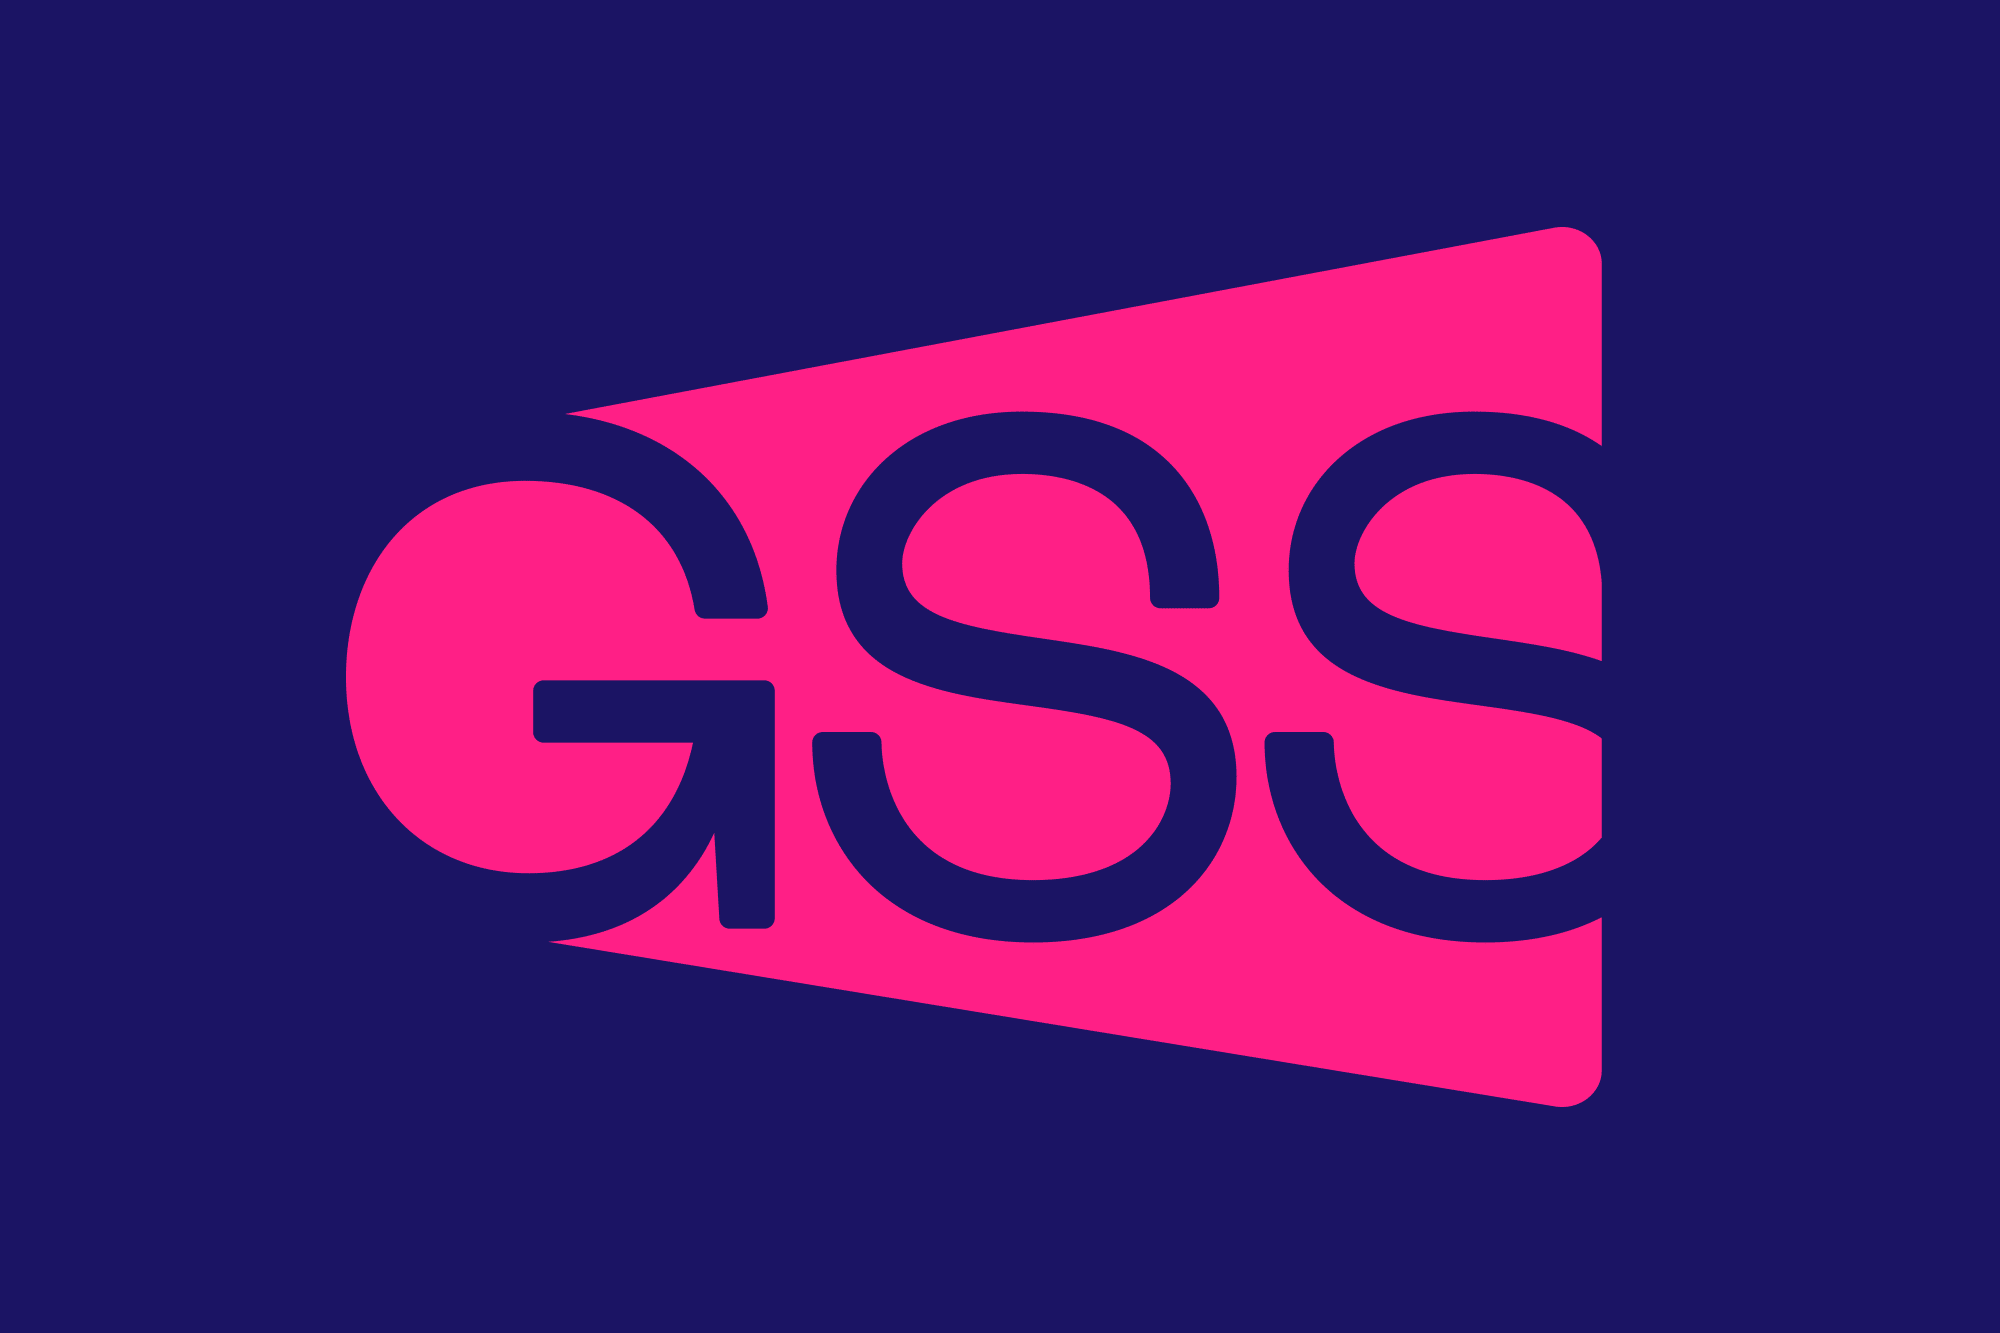 GSS_01